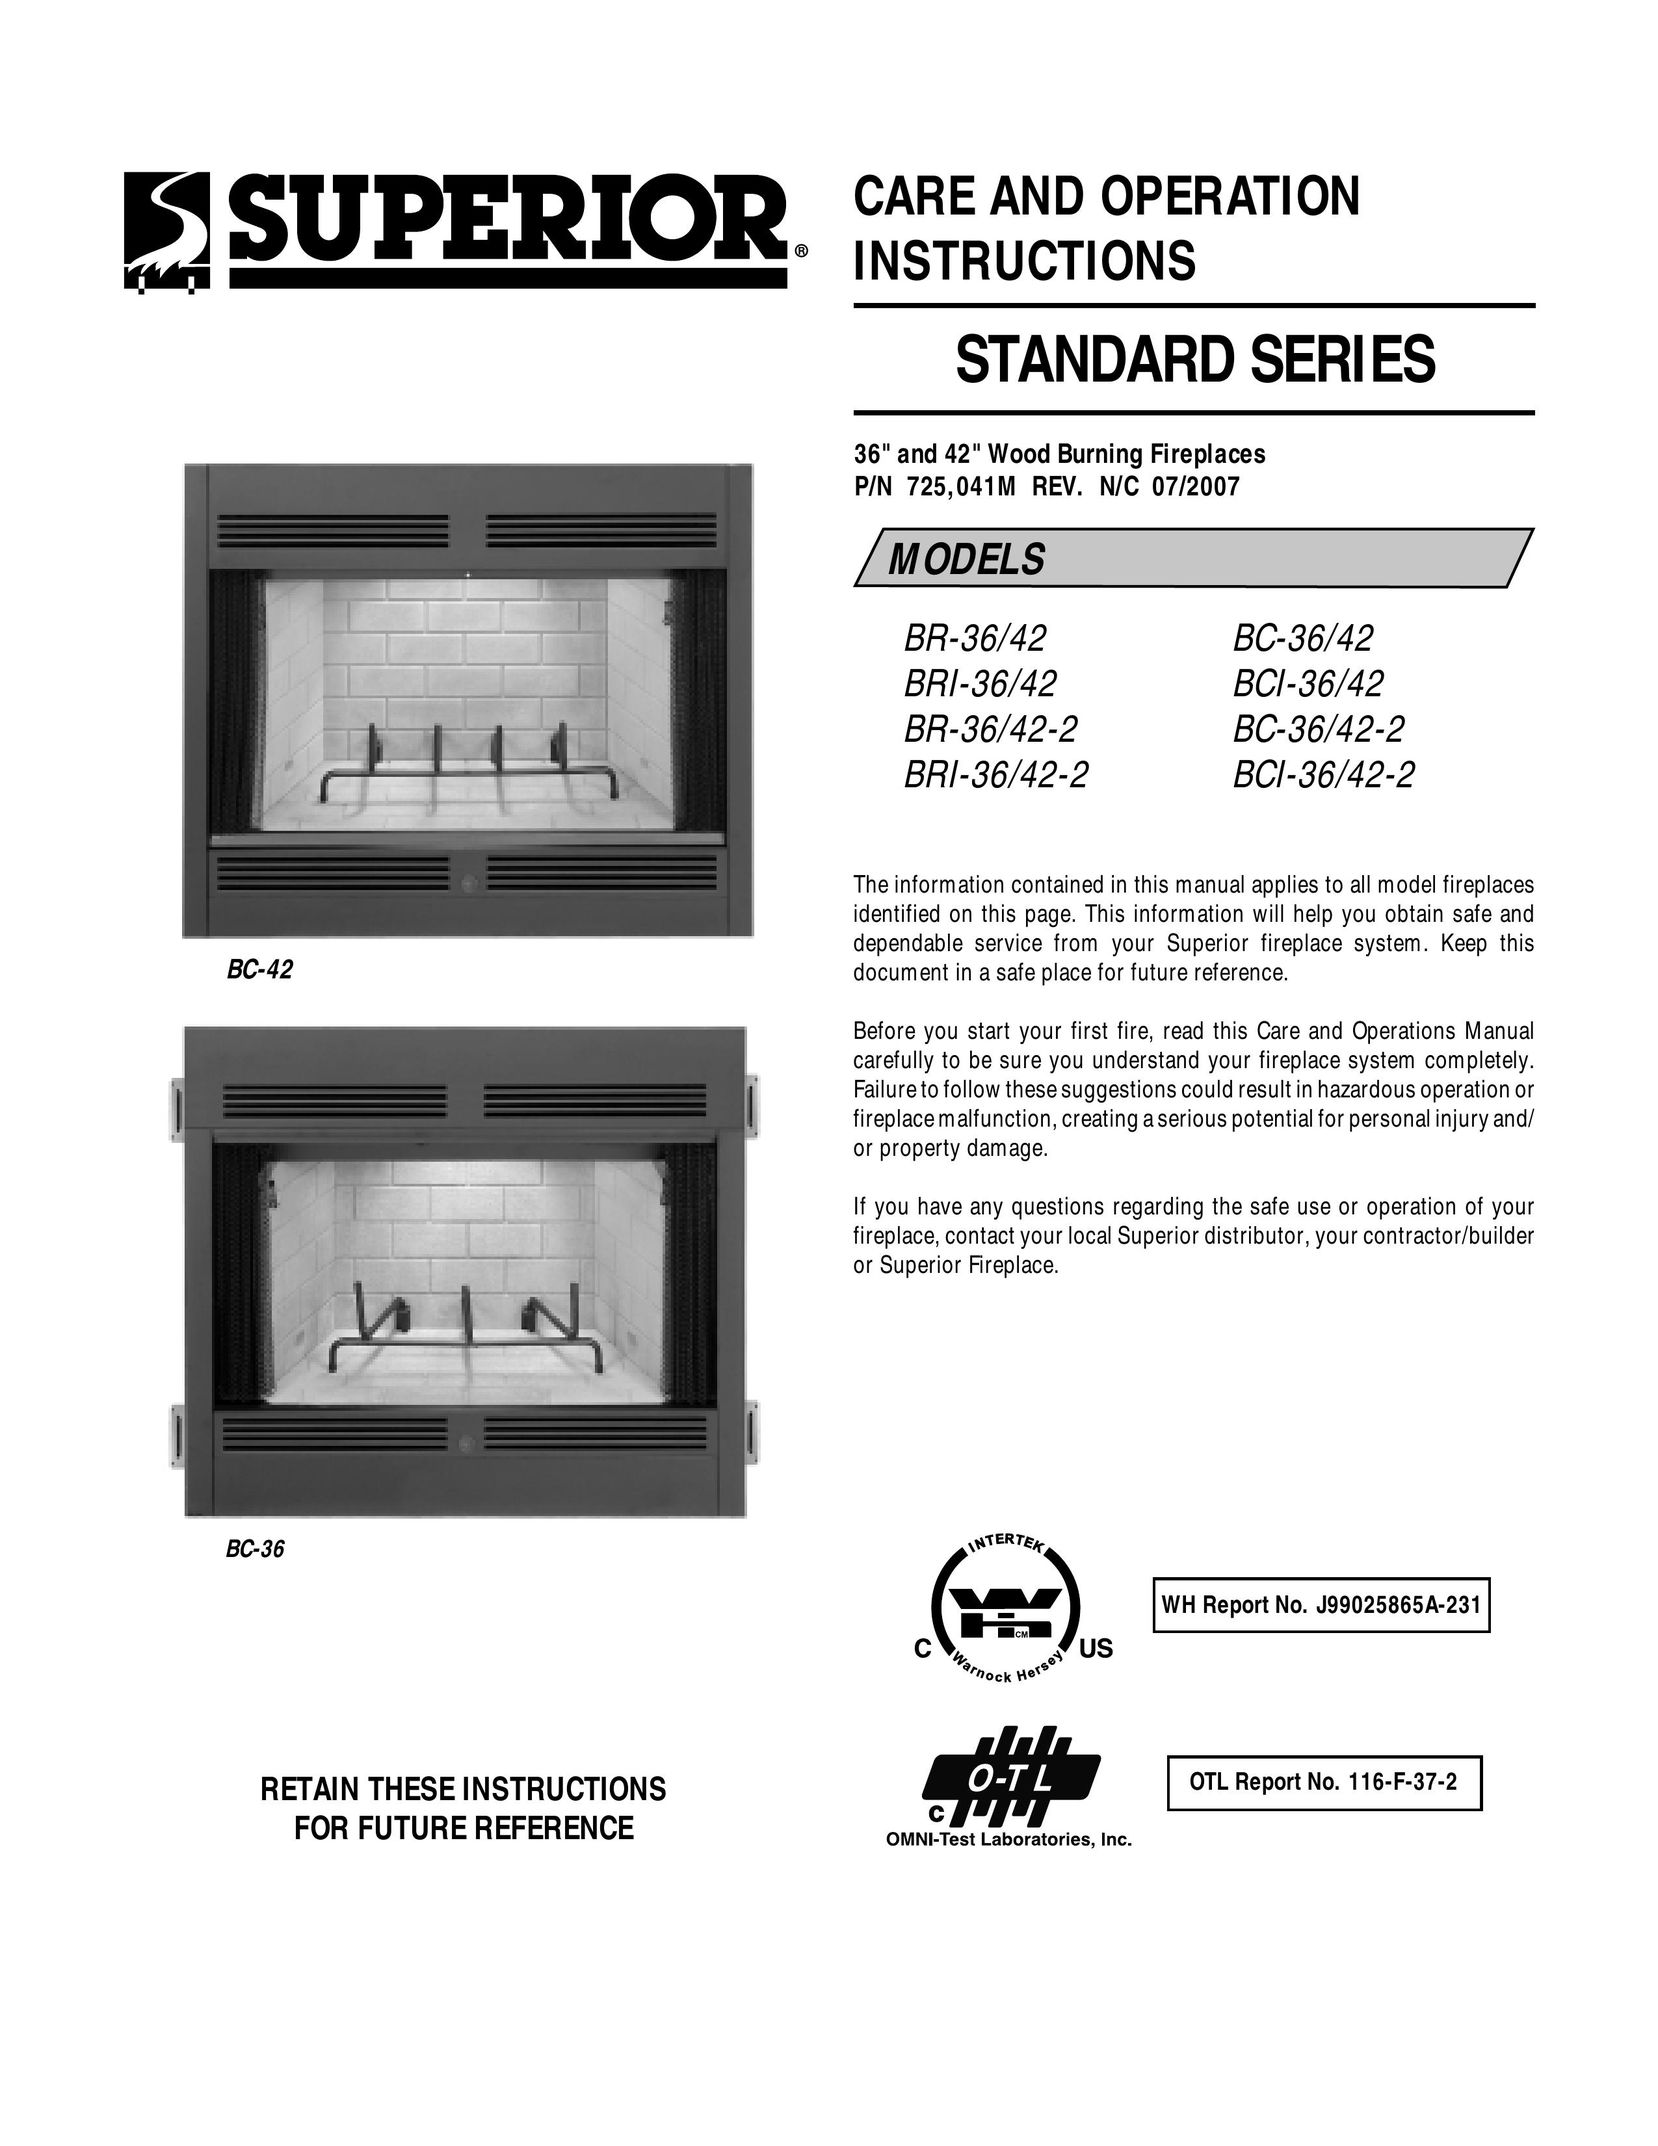 Superior BCI-36/42 Indoor Fireplace User Manual